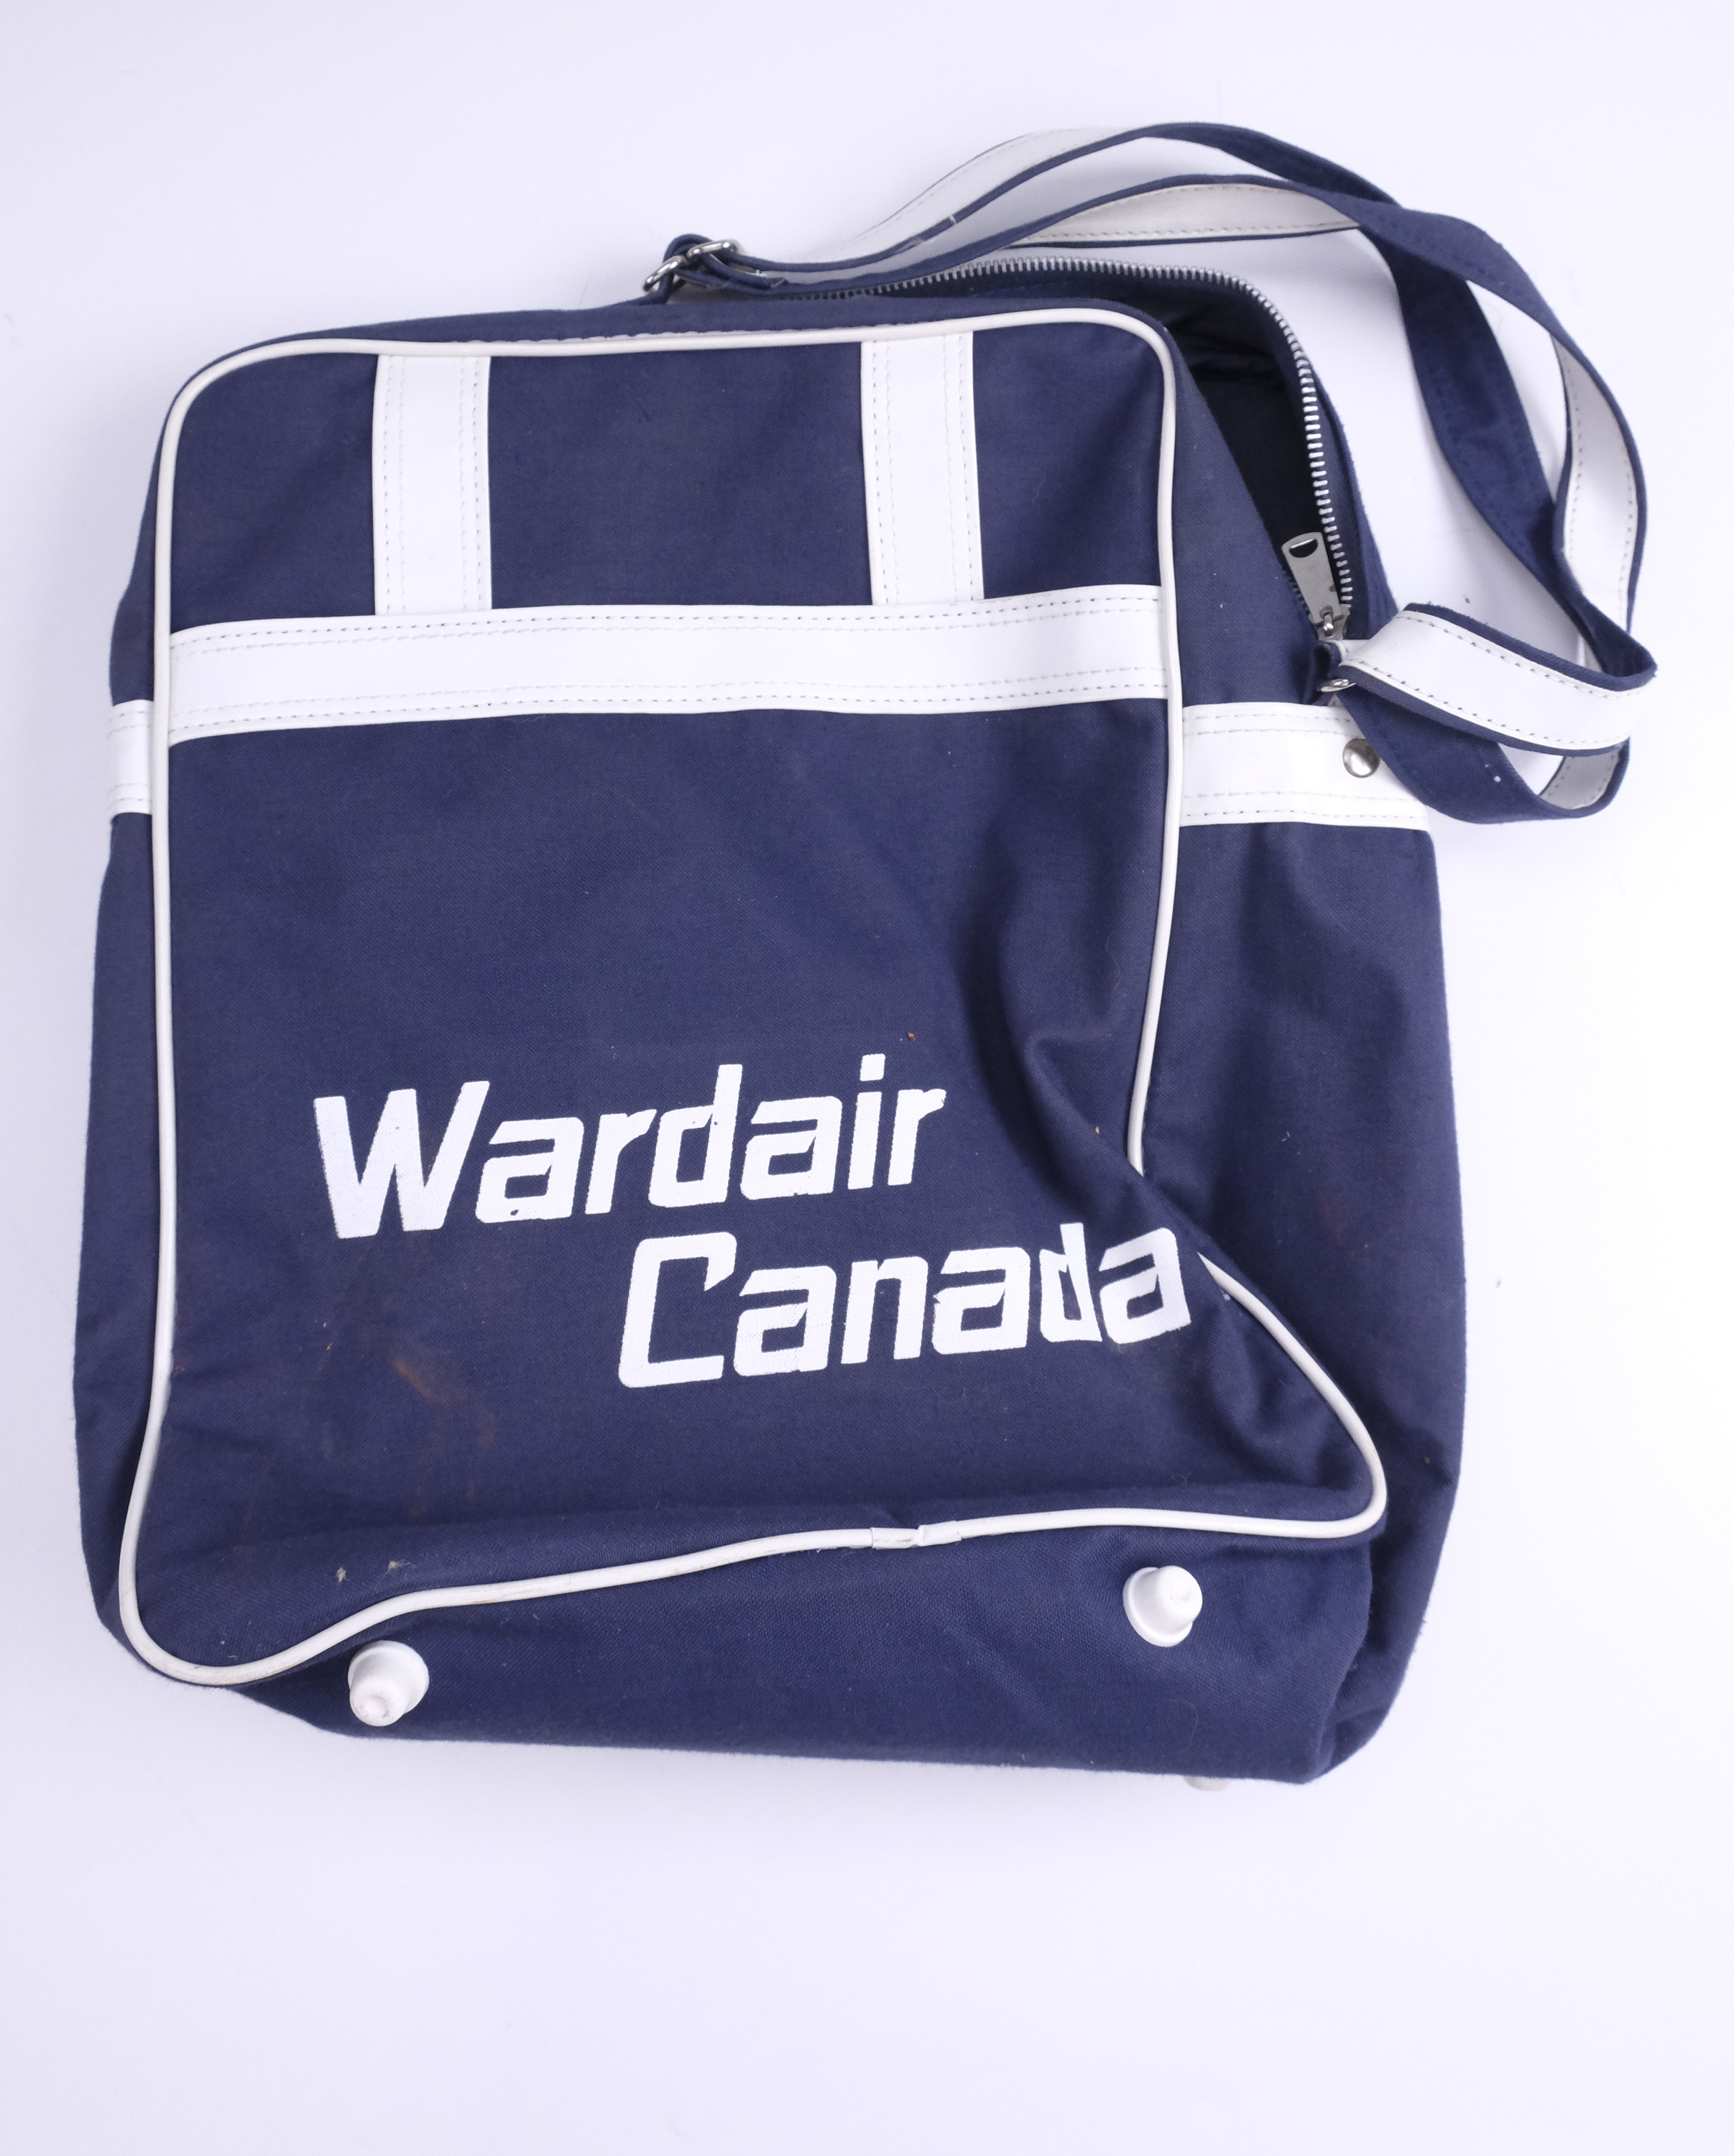 A vintage 'Wardair Canada' canvas travel bag, 28 x 15 x 37 cm - Image 2 of 2